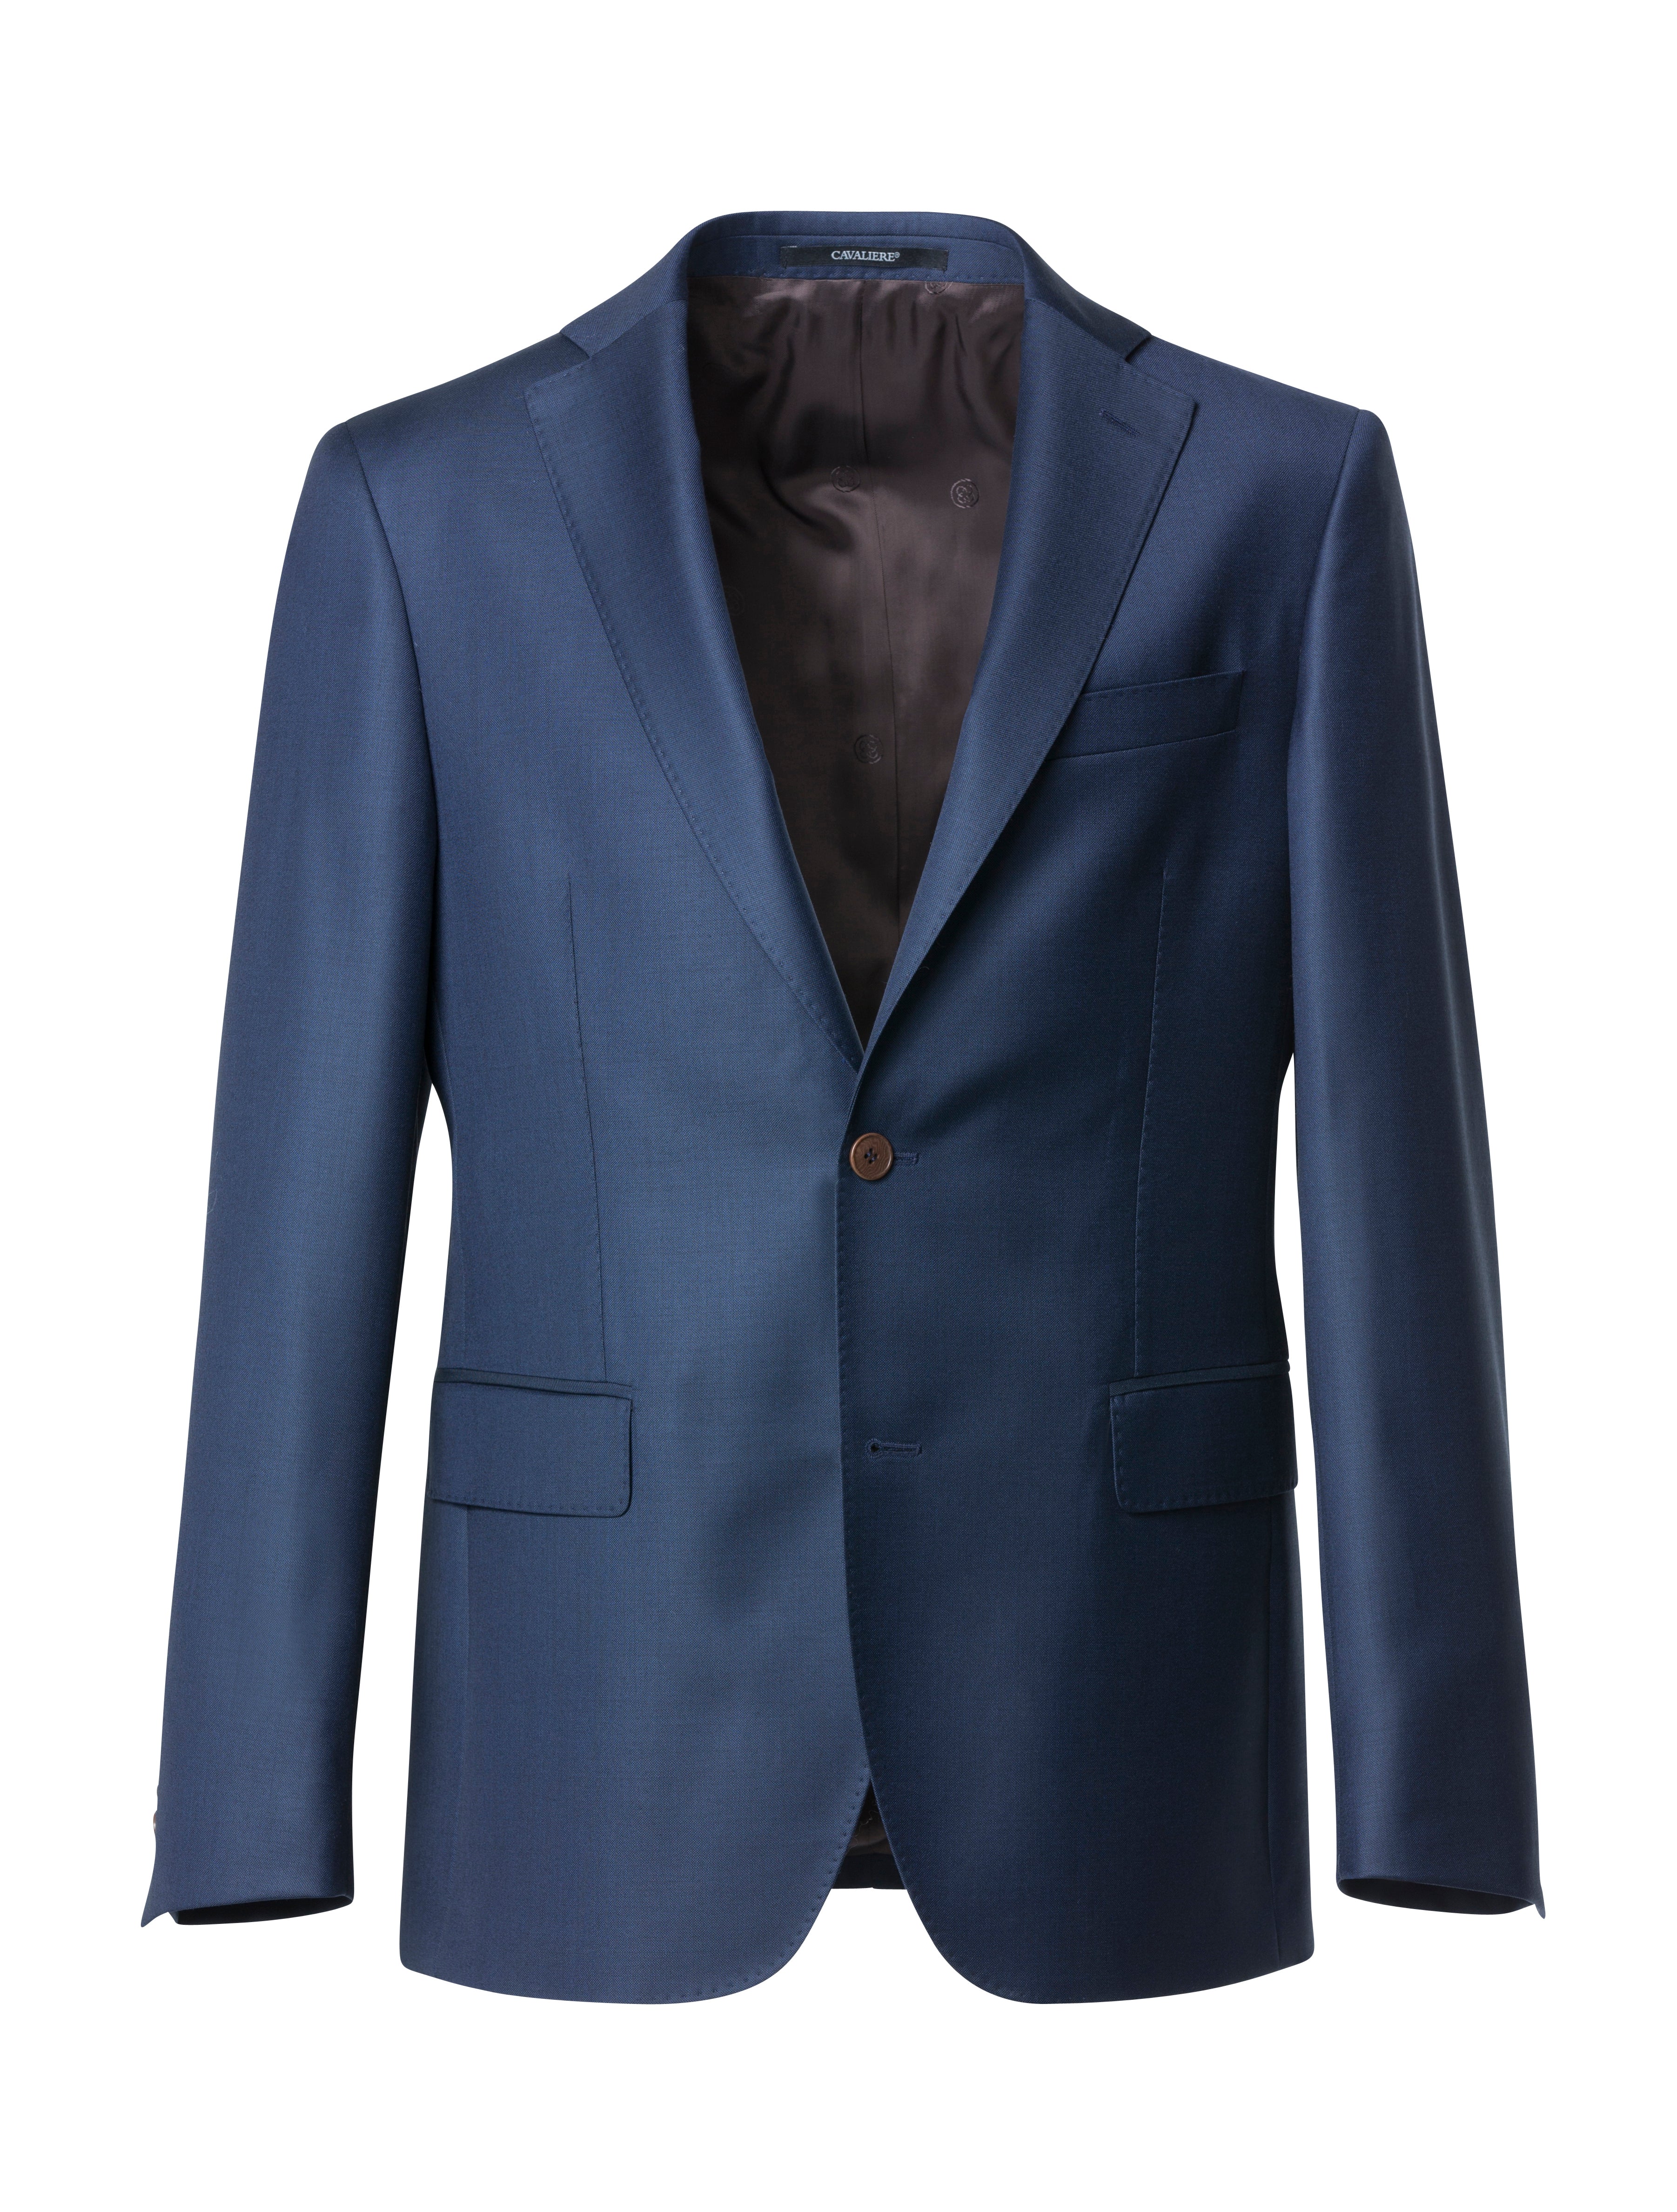 CAVALIERE - PAXTON Navy Blue Slim Fit Suit Jacket 1013029-79